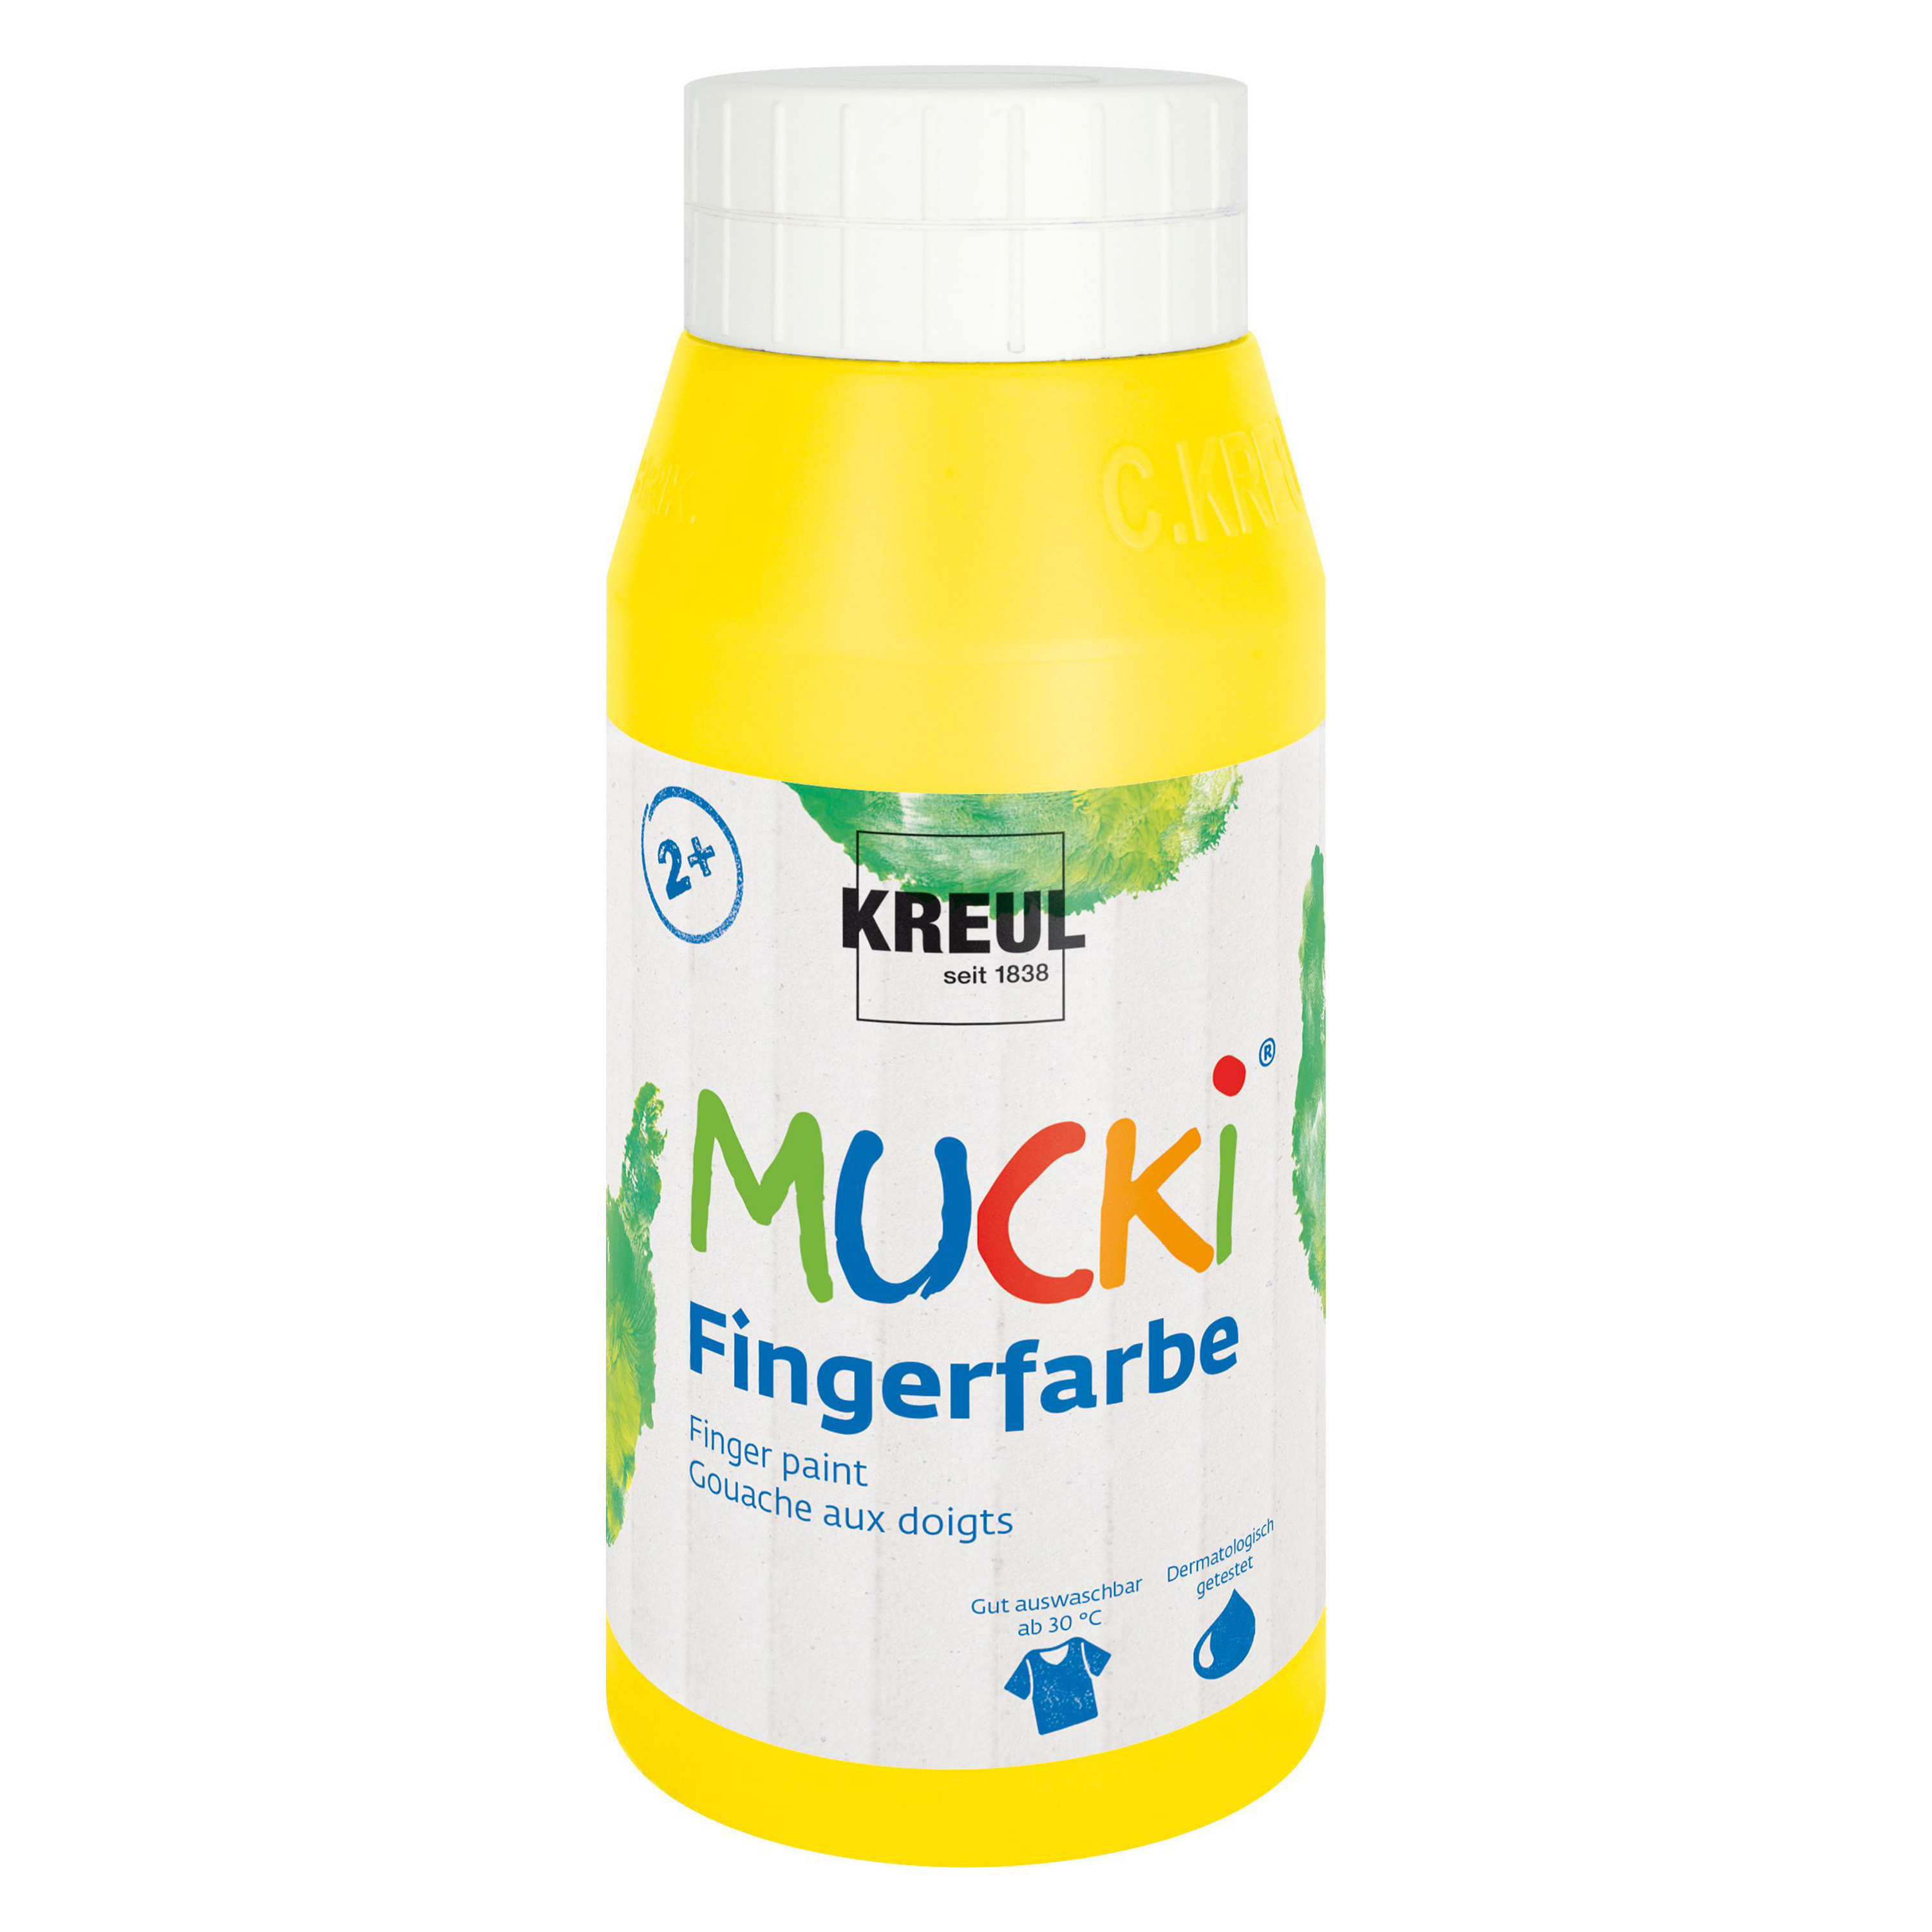 MUCKI Fingerfarbe, 750 ml, gelb